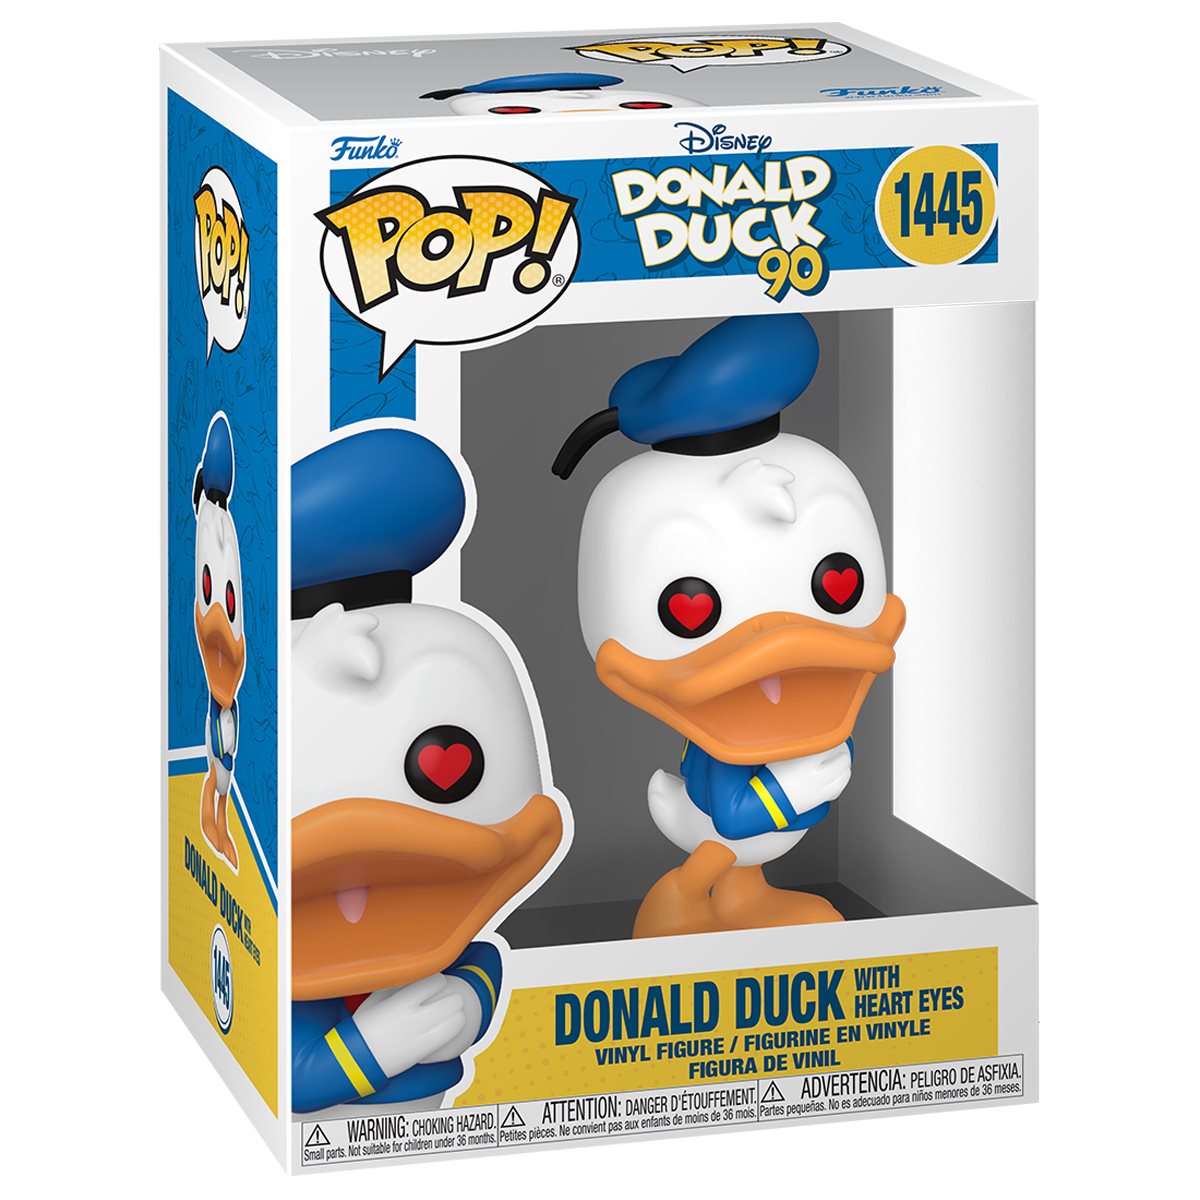 Funko Pop! Disney Donald Duck 90th Anniversary Donald Duck with Heart Eyes Vinyl Figure #1445